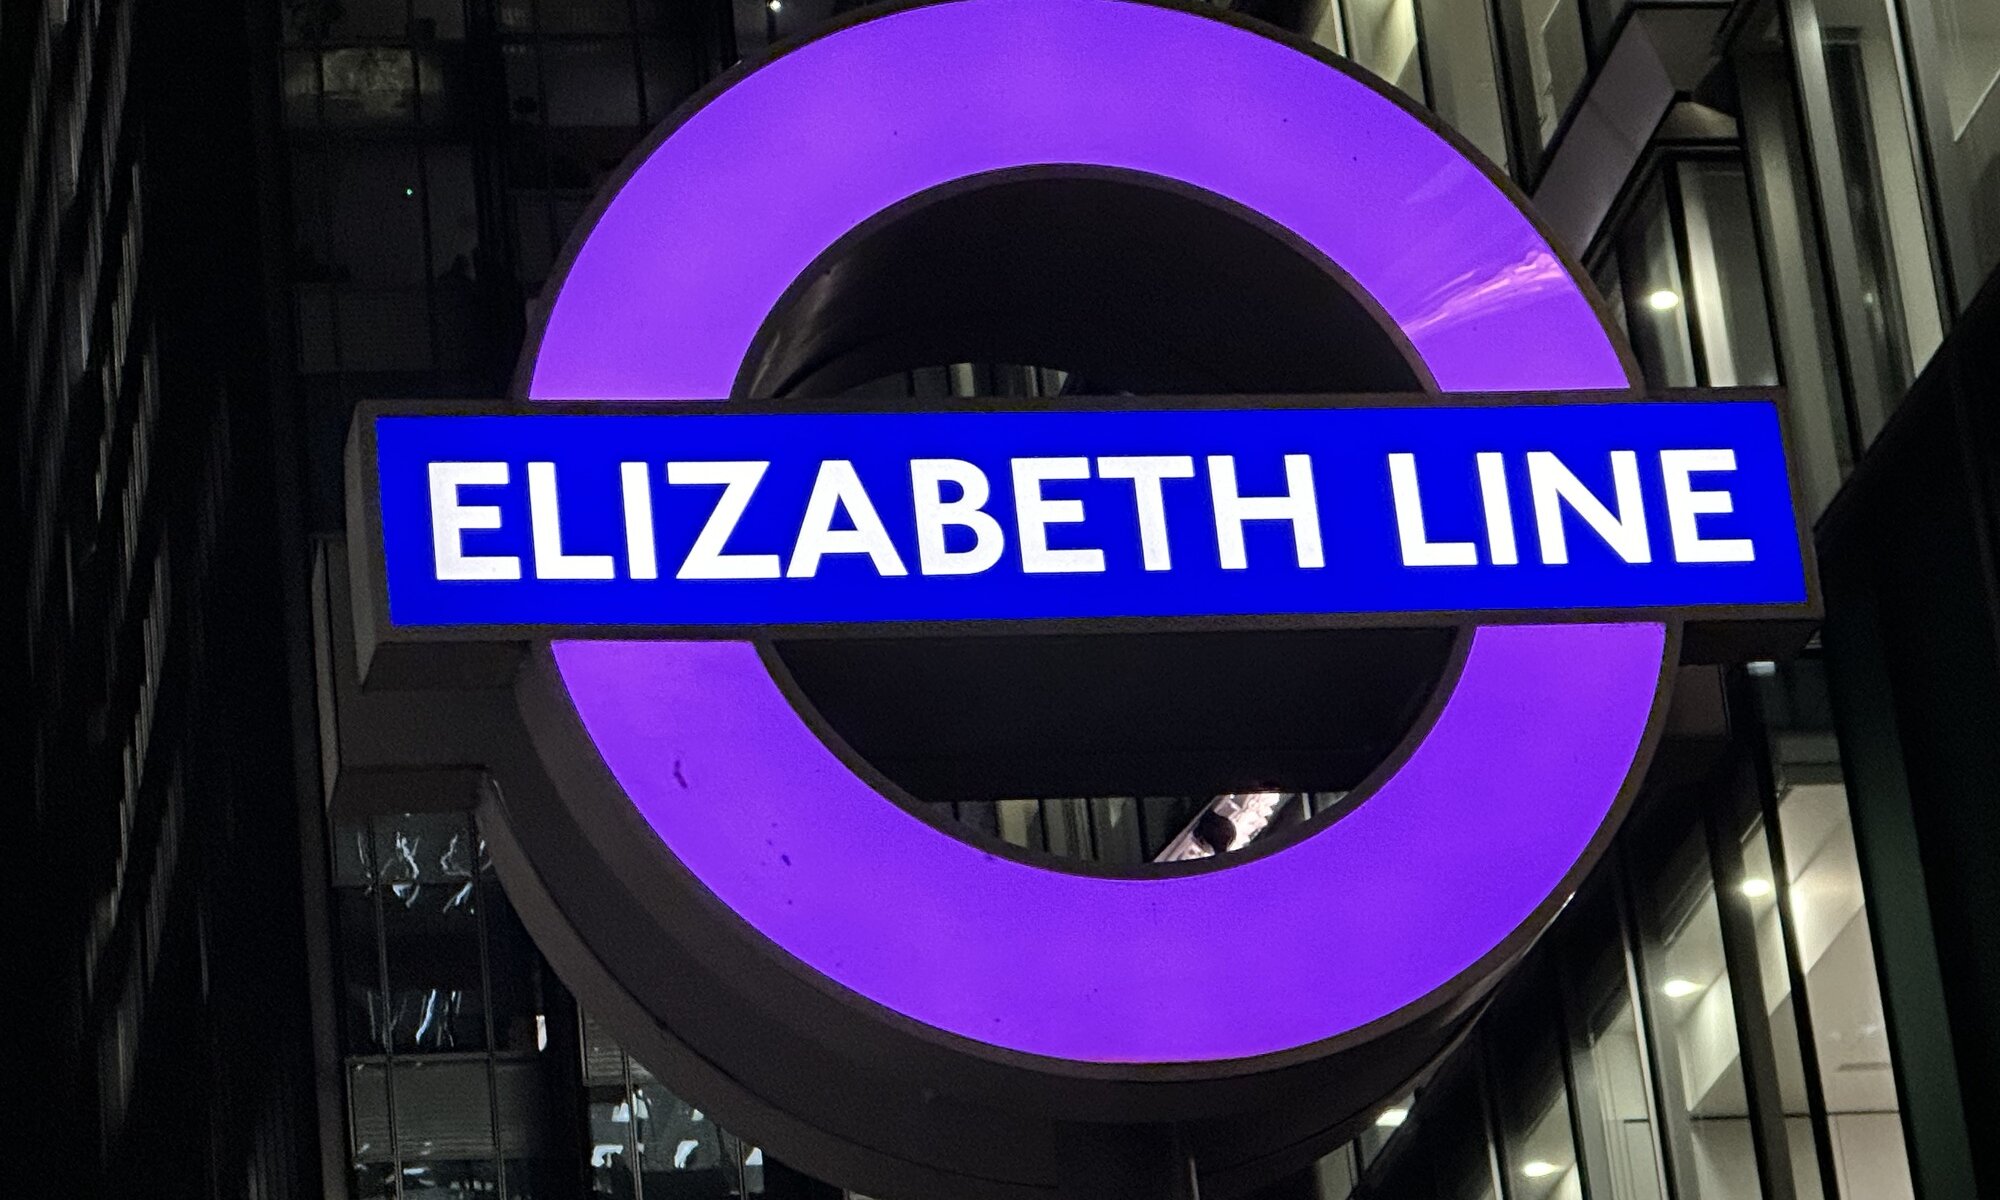 Elizabeth line, London